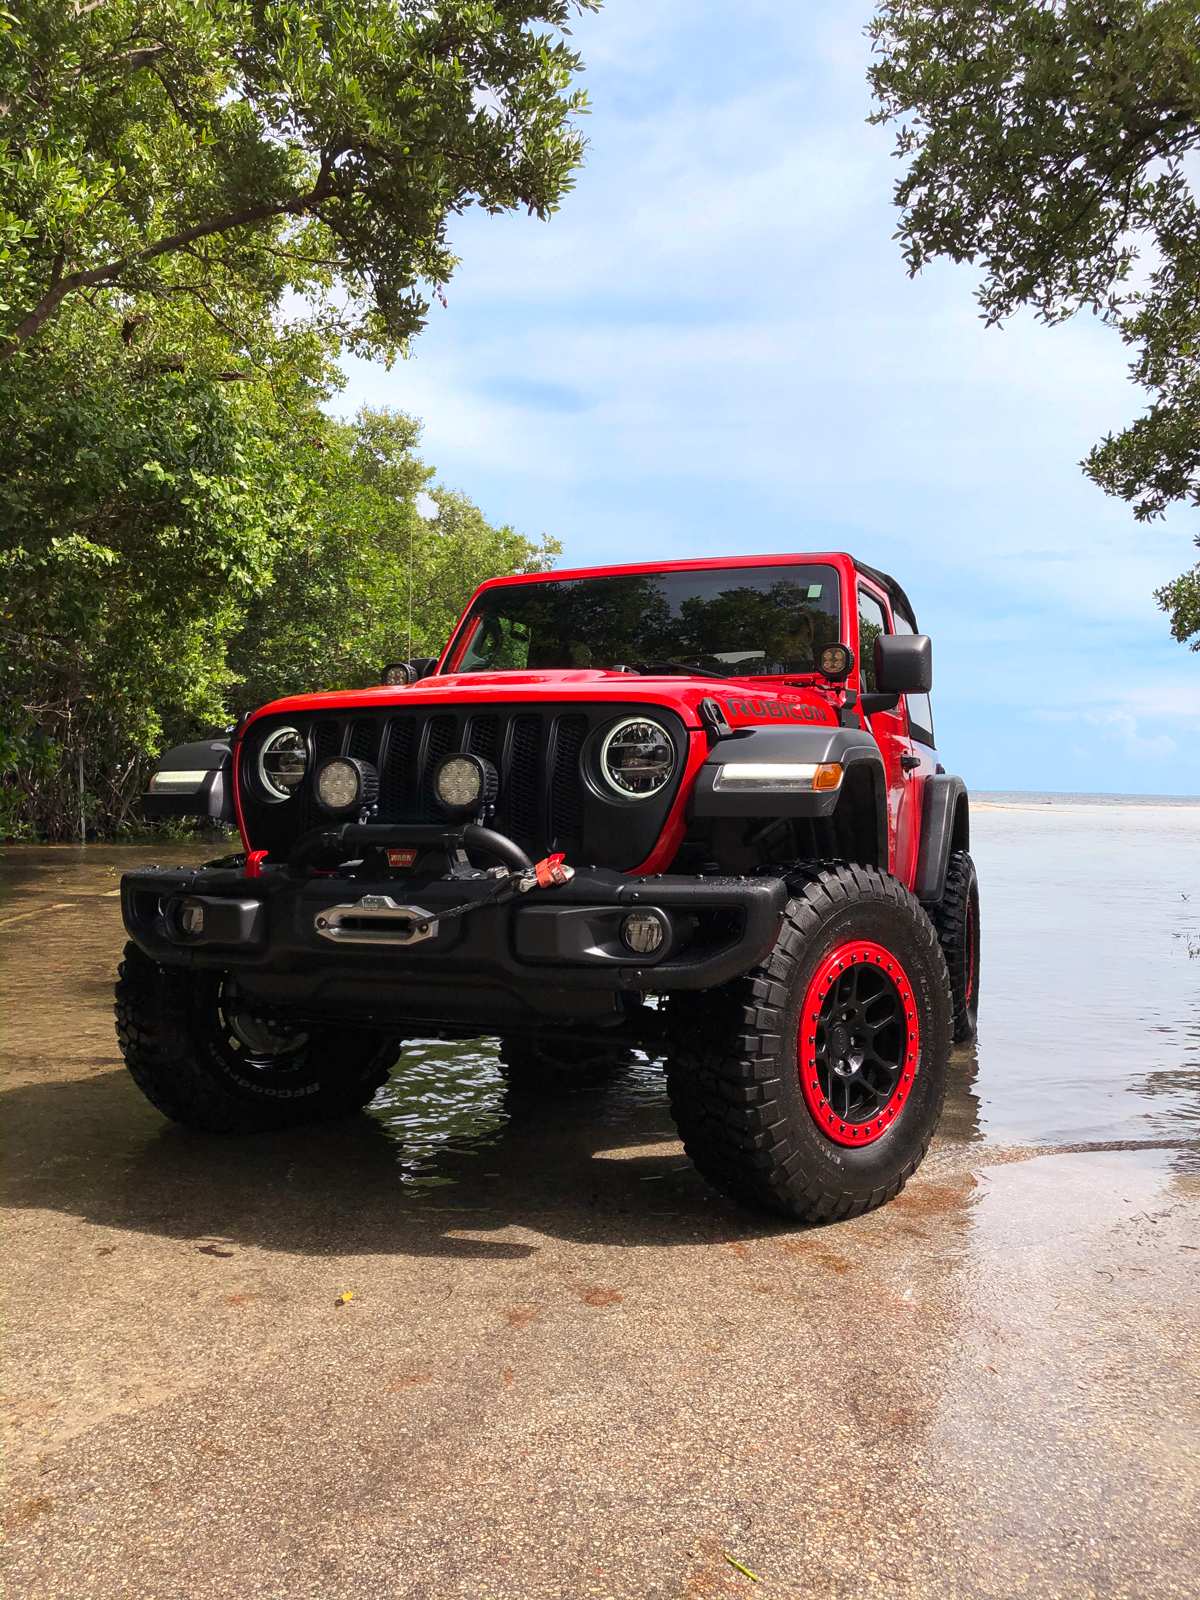 Jeep Wrangler Rubicon Exploring High Tide in Matheson Hammock Park in Coral Gables, Florida - Miami